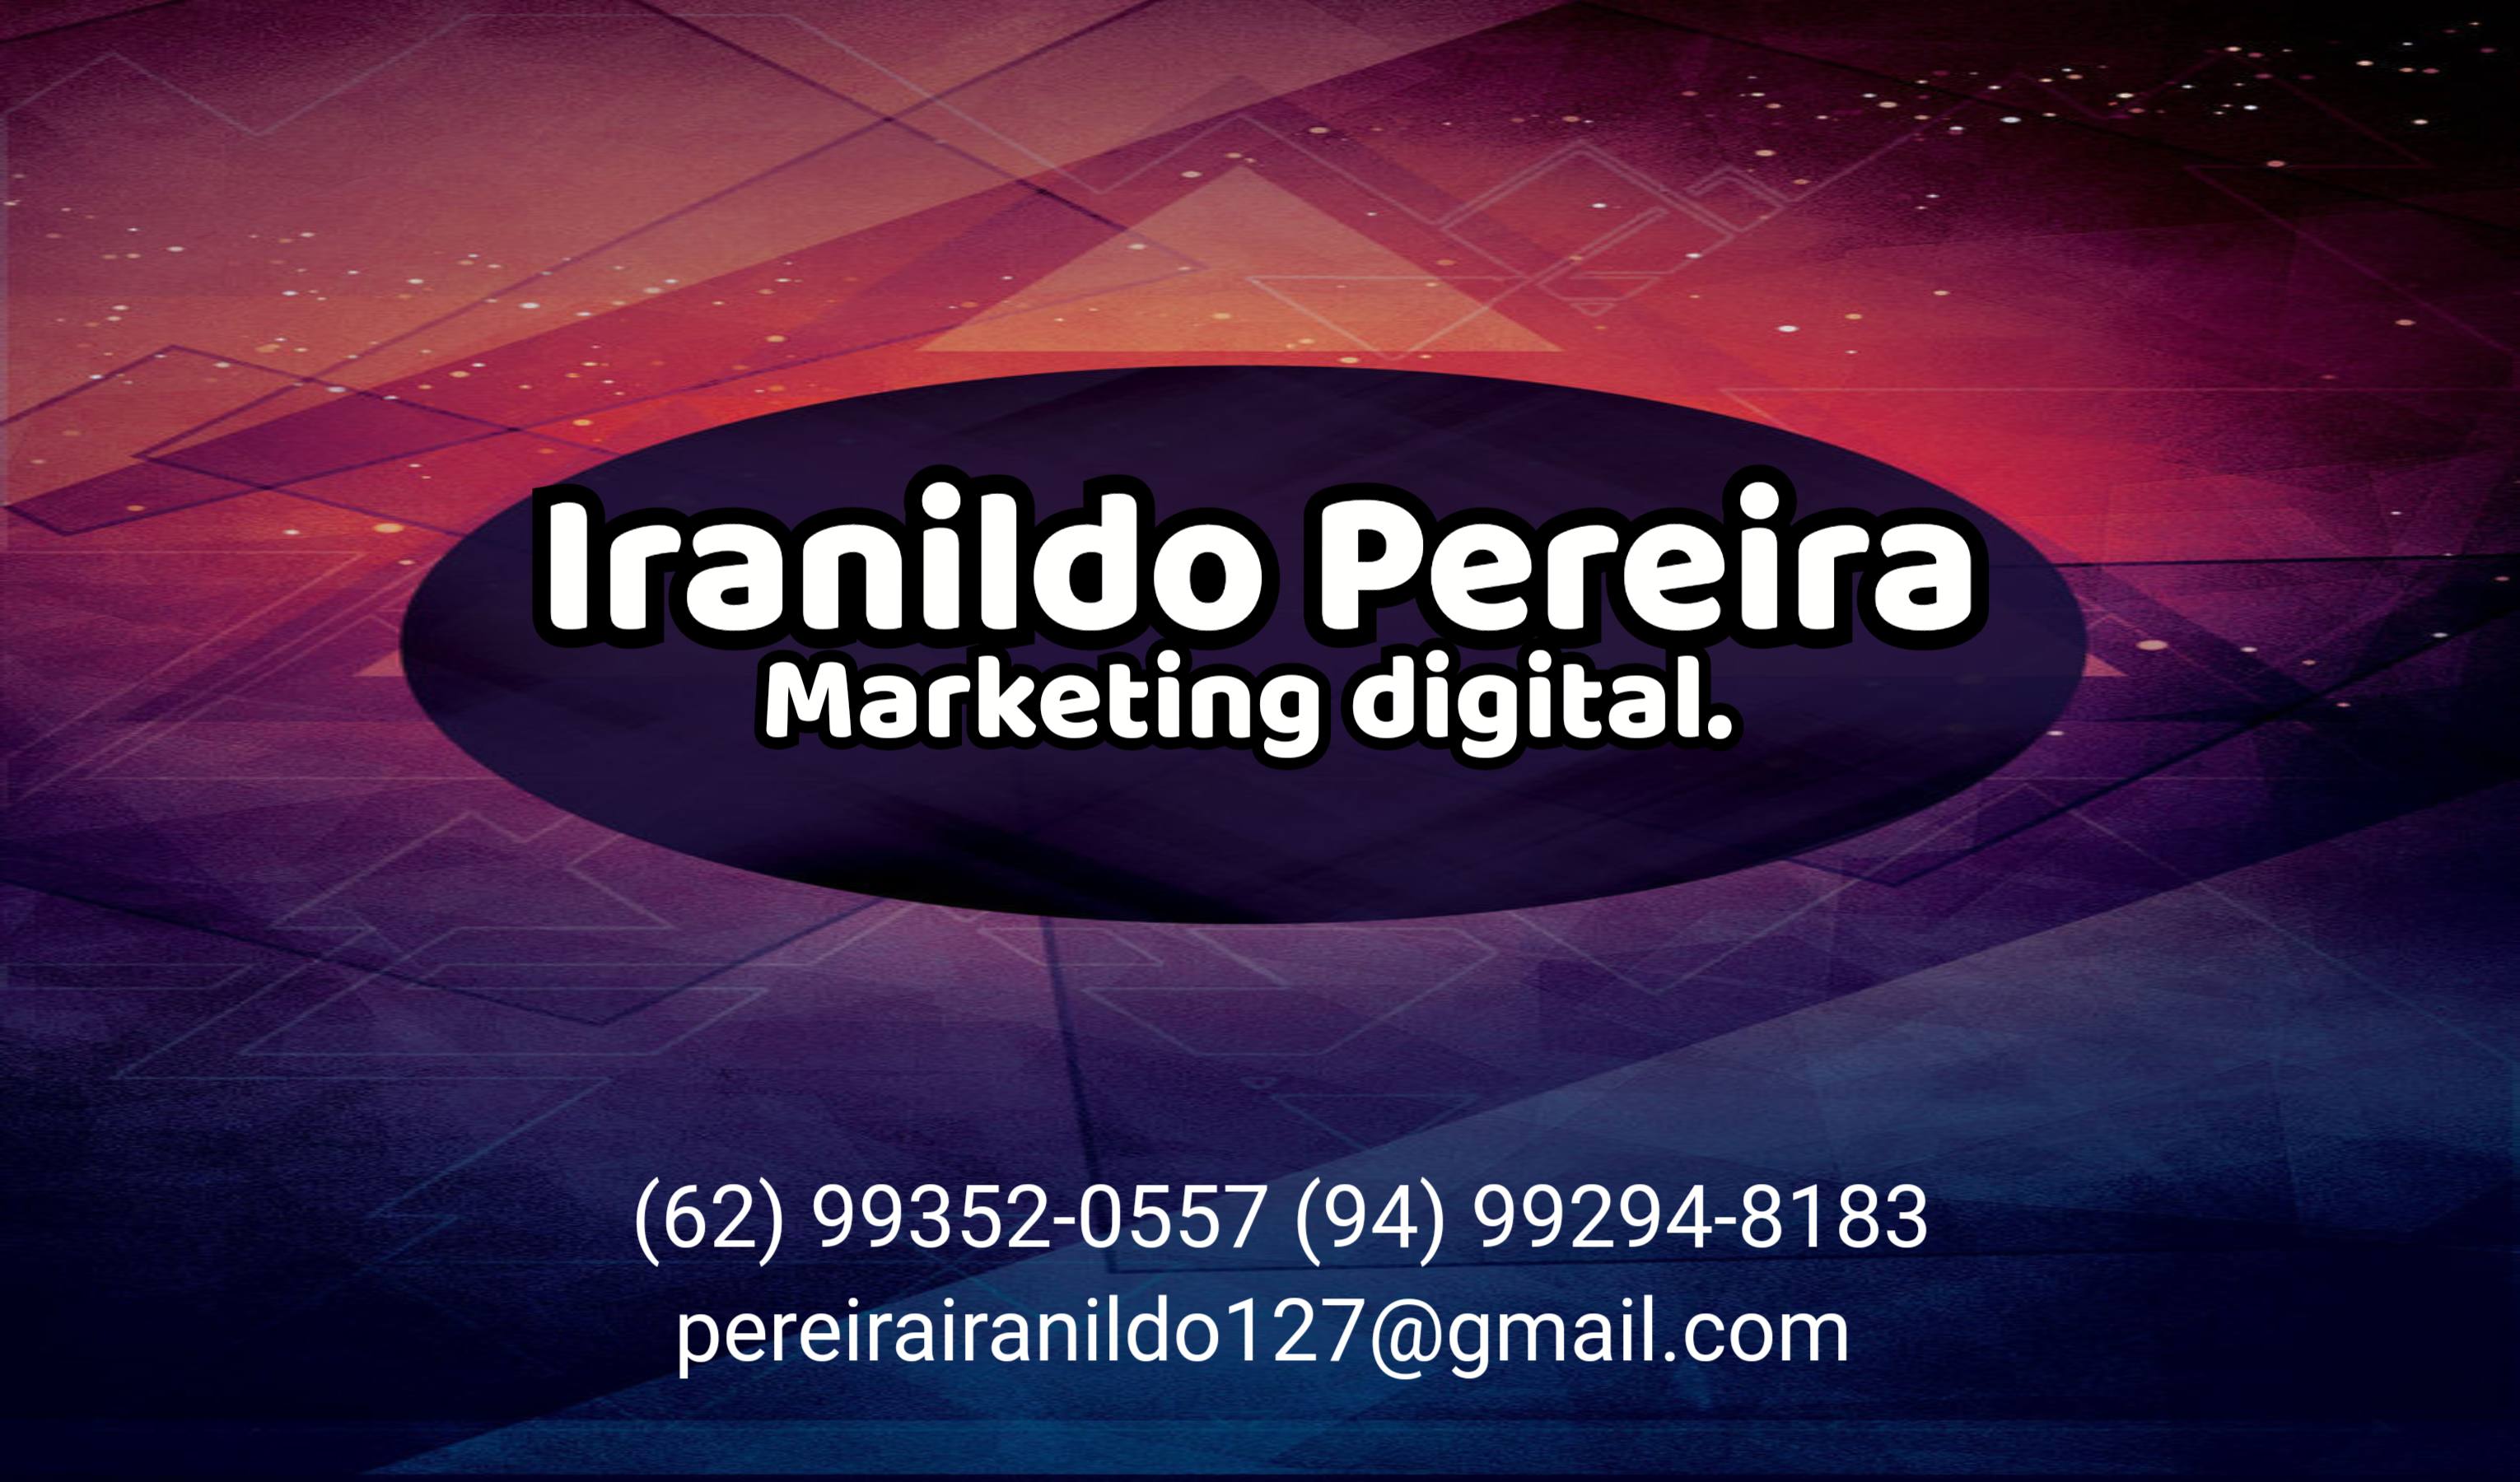 Iranildo Pereira Marketing digital